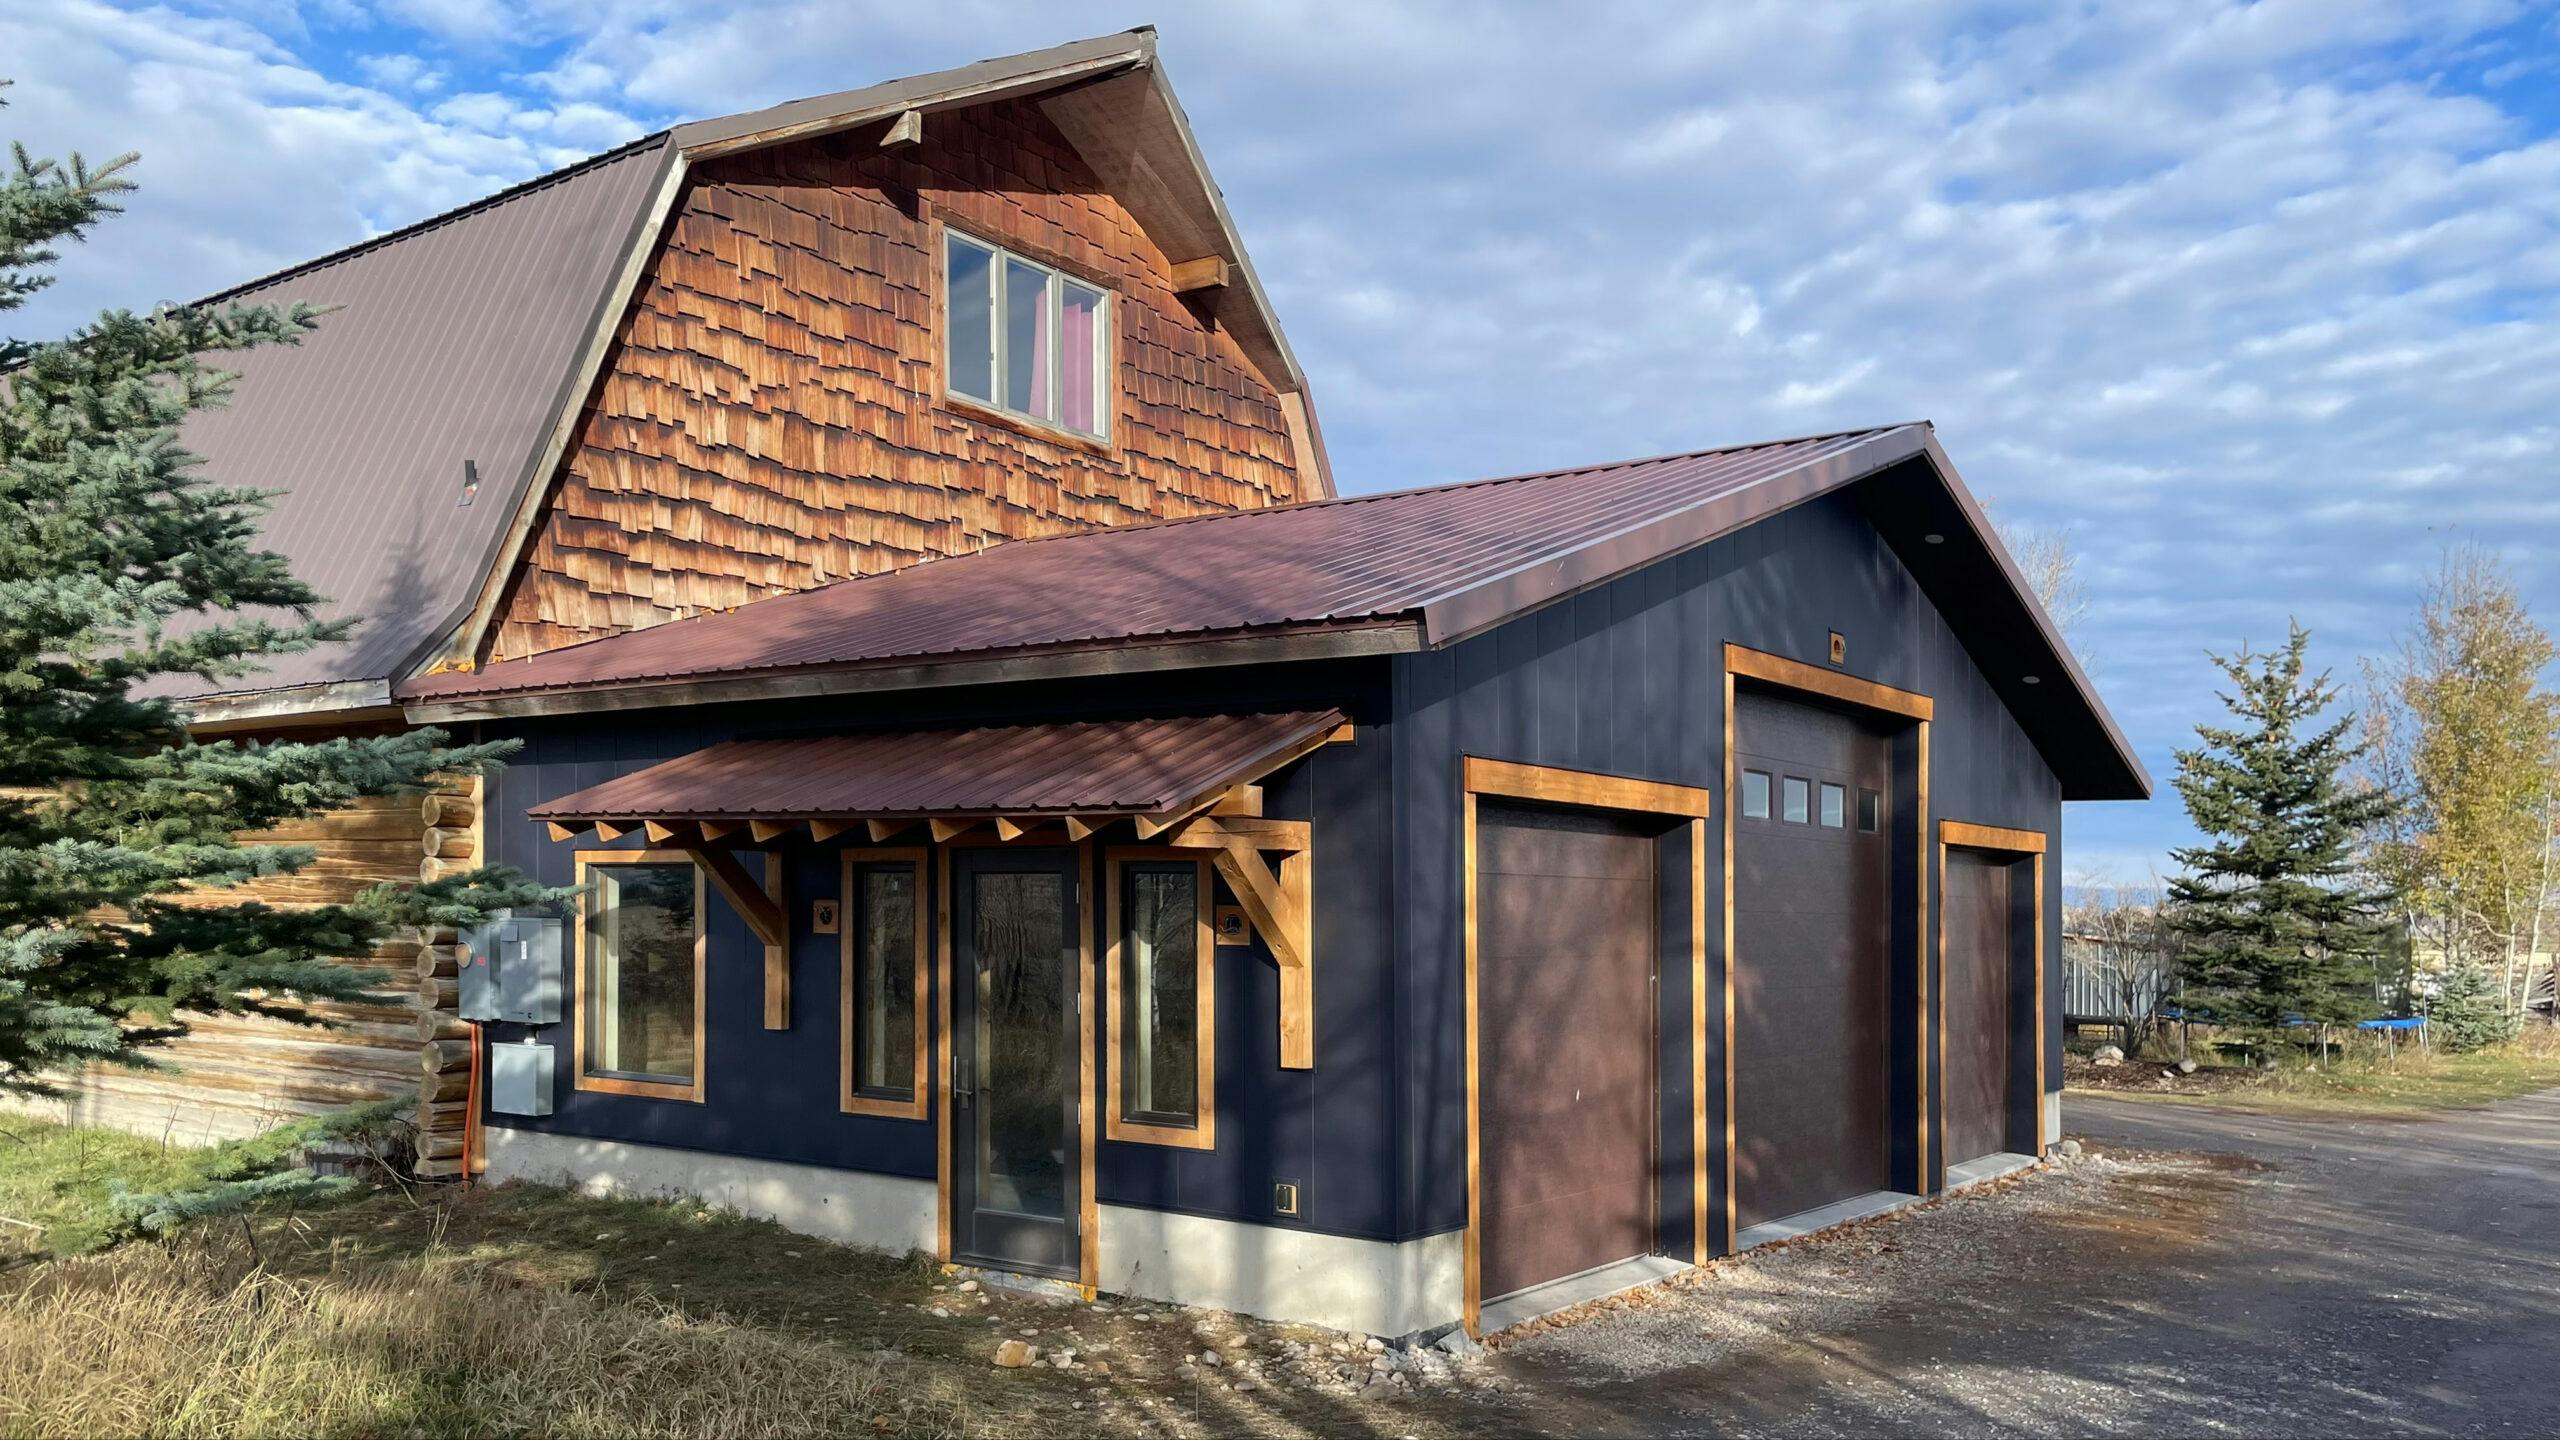 LEED-certified sustainable building in Teton Valley, Idaho